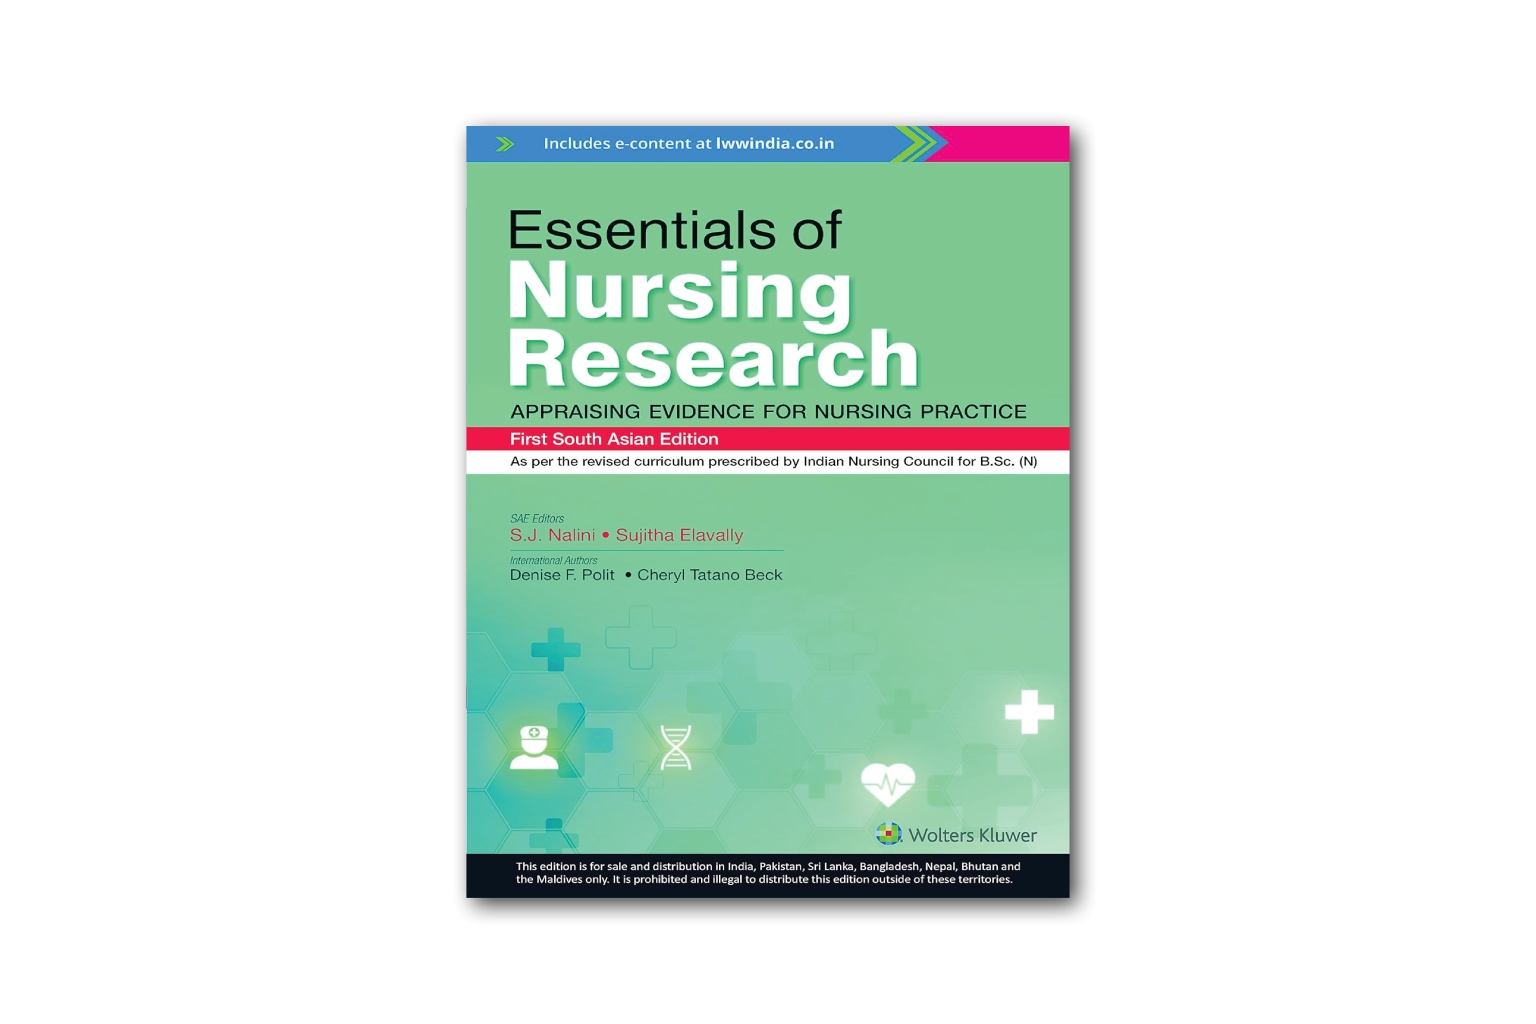 Essentials of Nursing Research e-content cover.